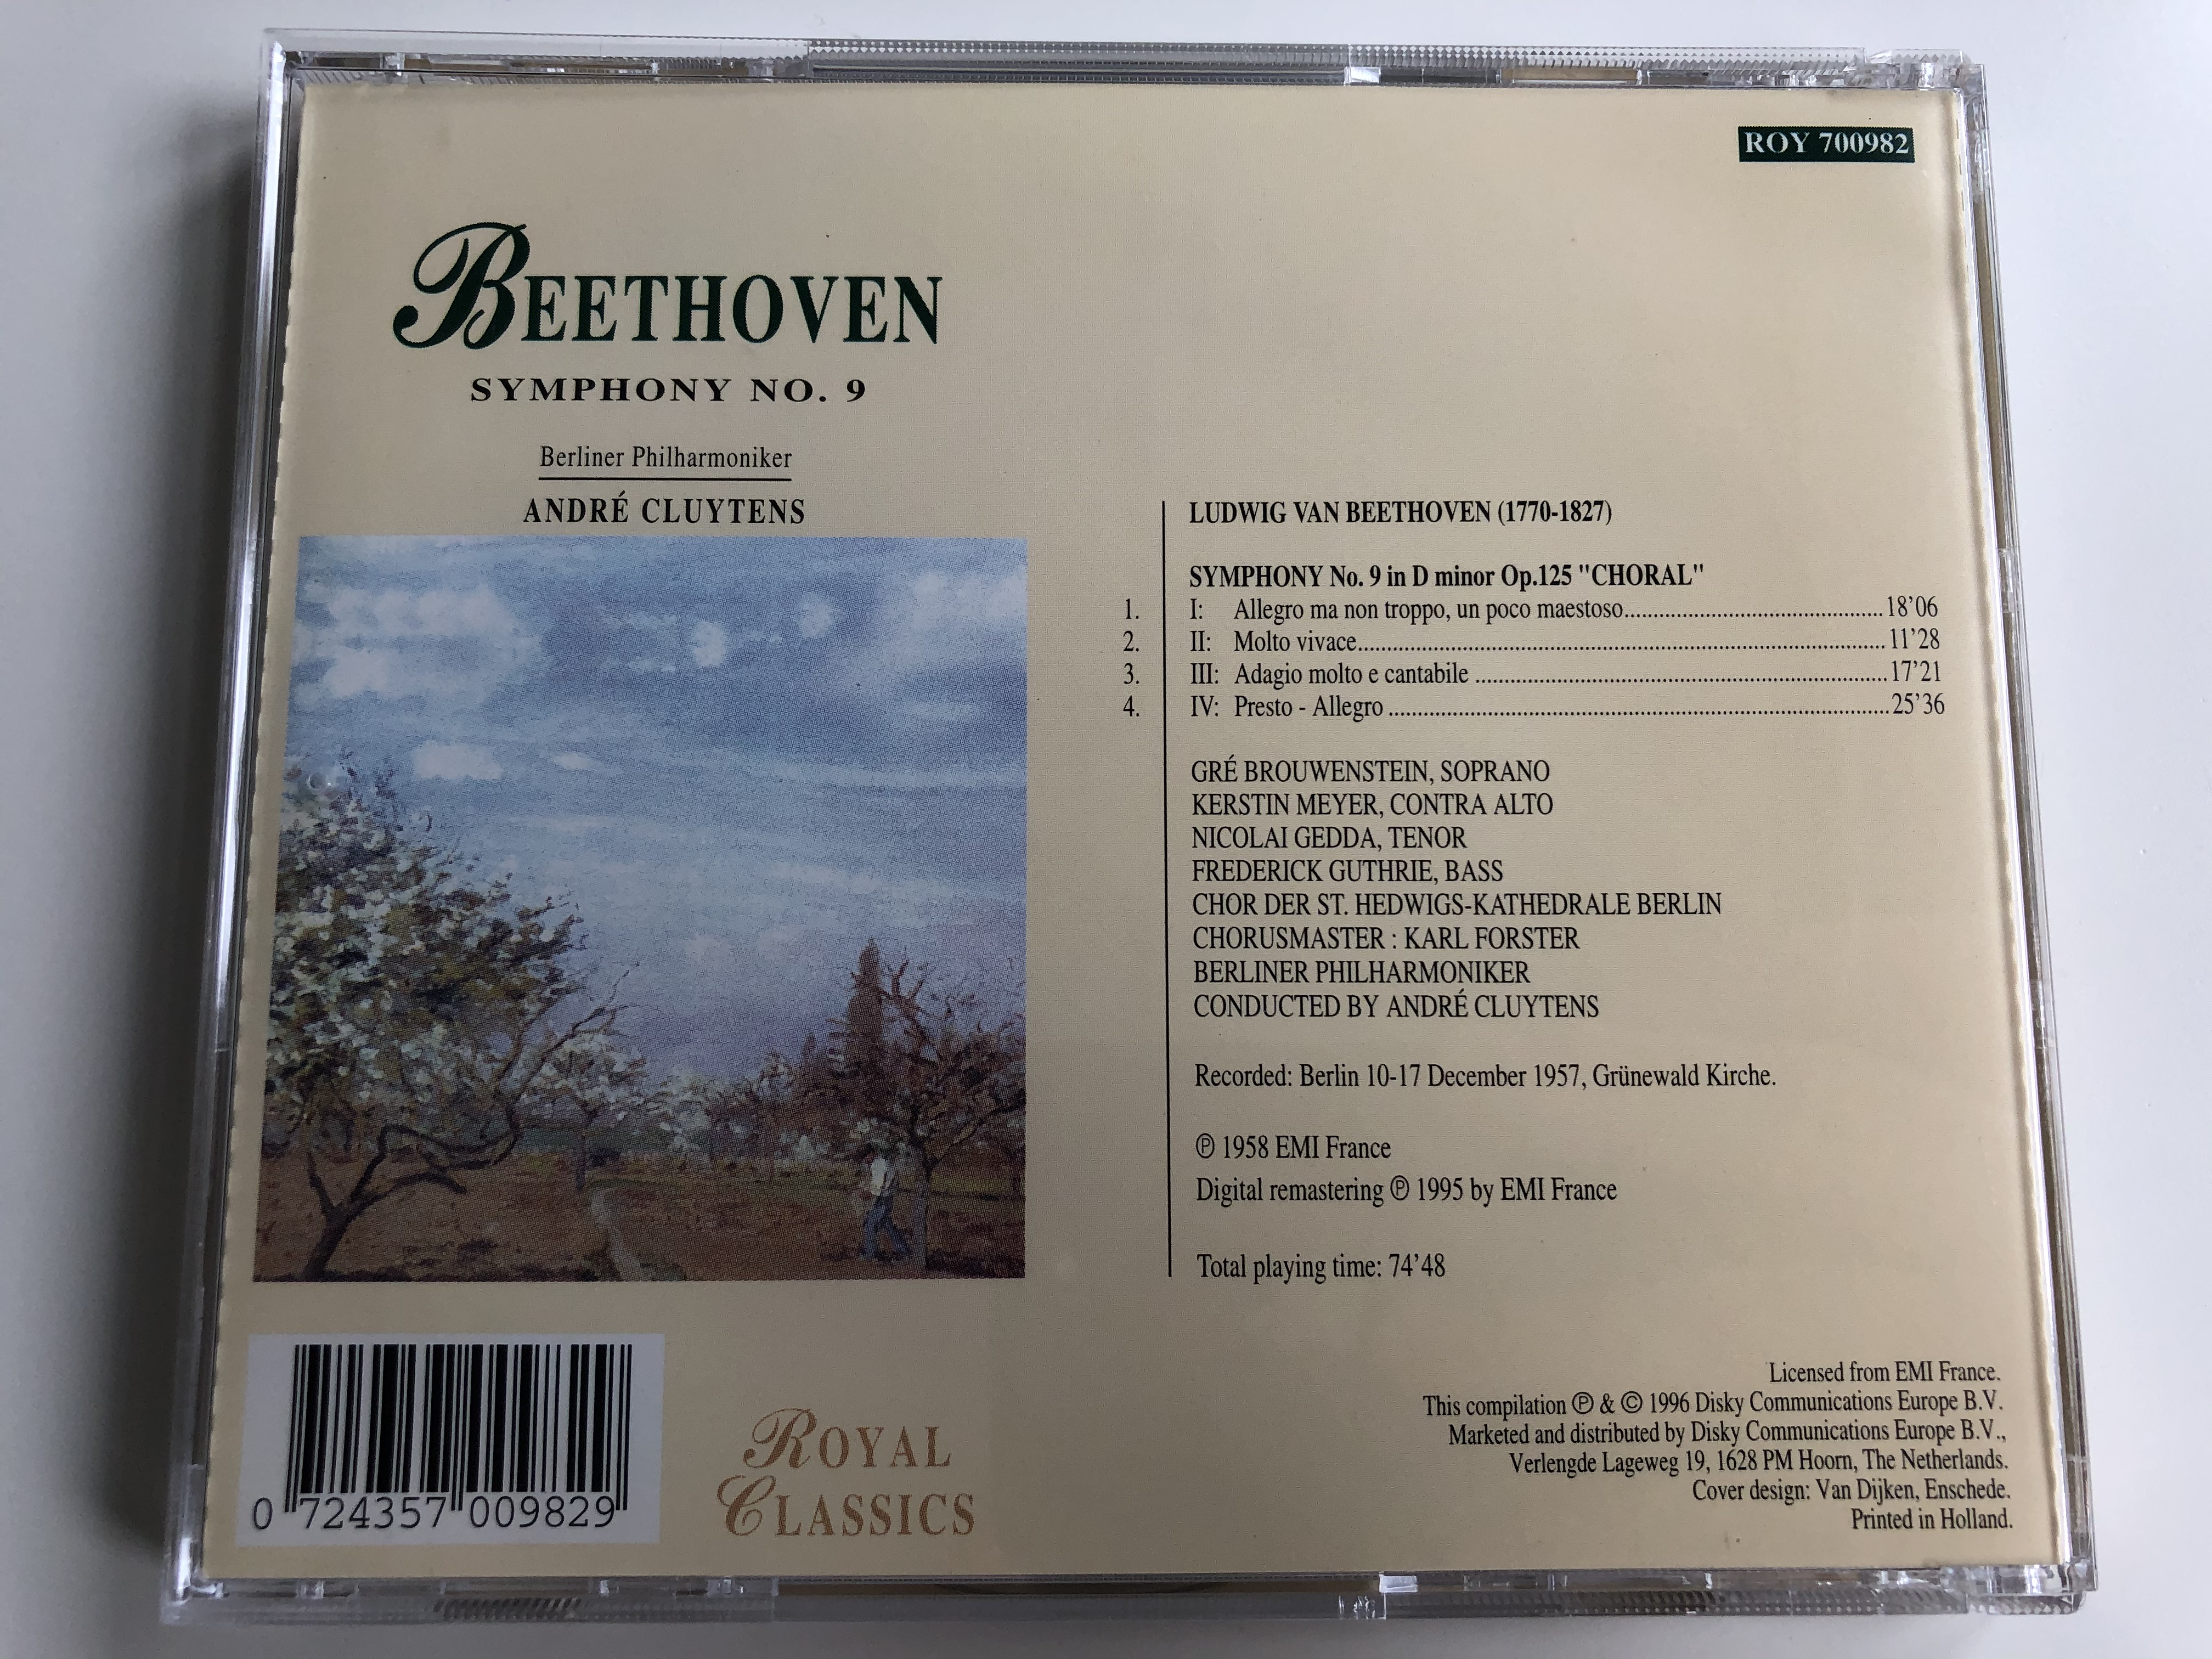 beethoven-symphony-no.-9-berliner-philharmoniker-andre-cluytens-royal-classics-audio-cd-roy-700982-4-.jpg